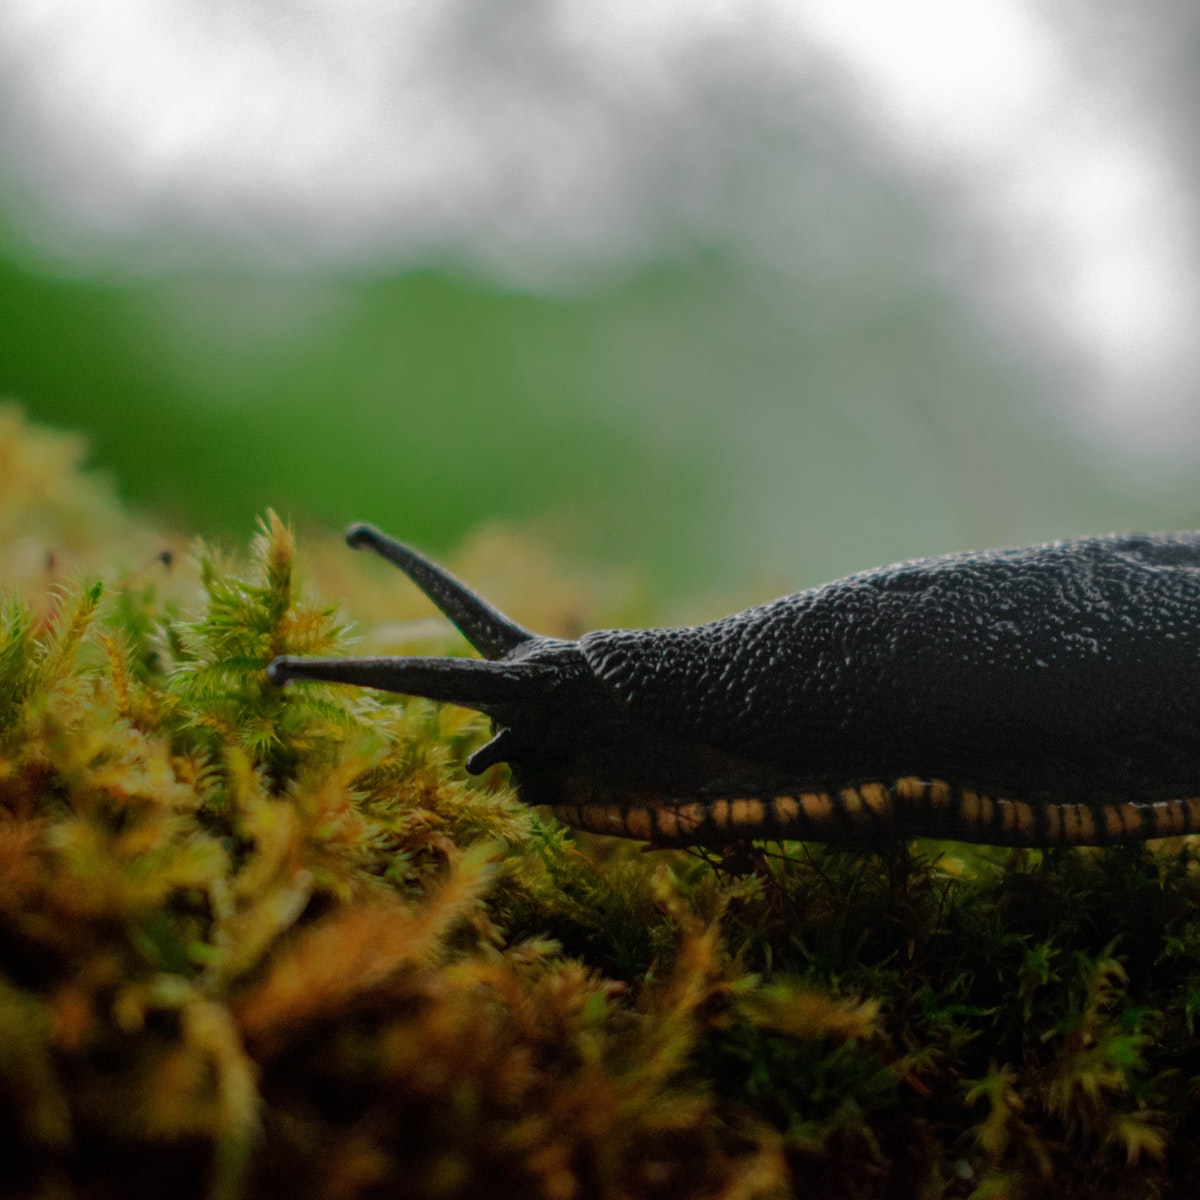 Black Snail on Green Grass